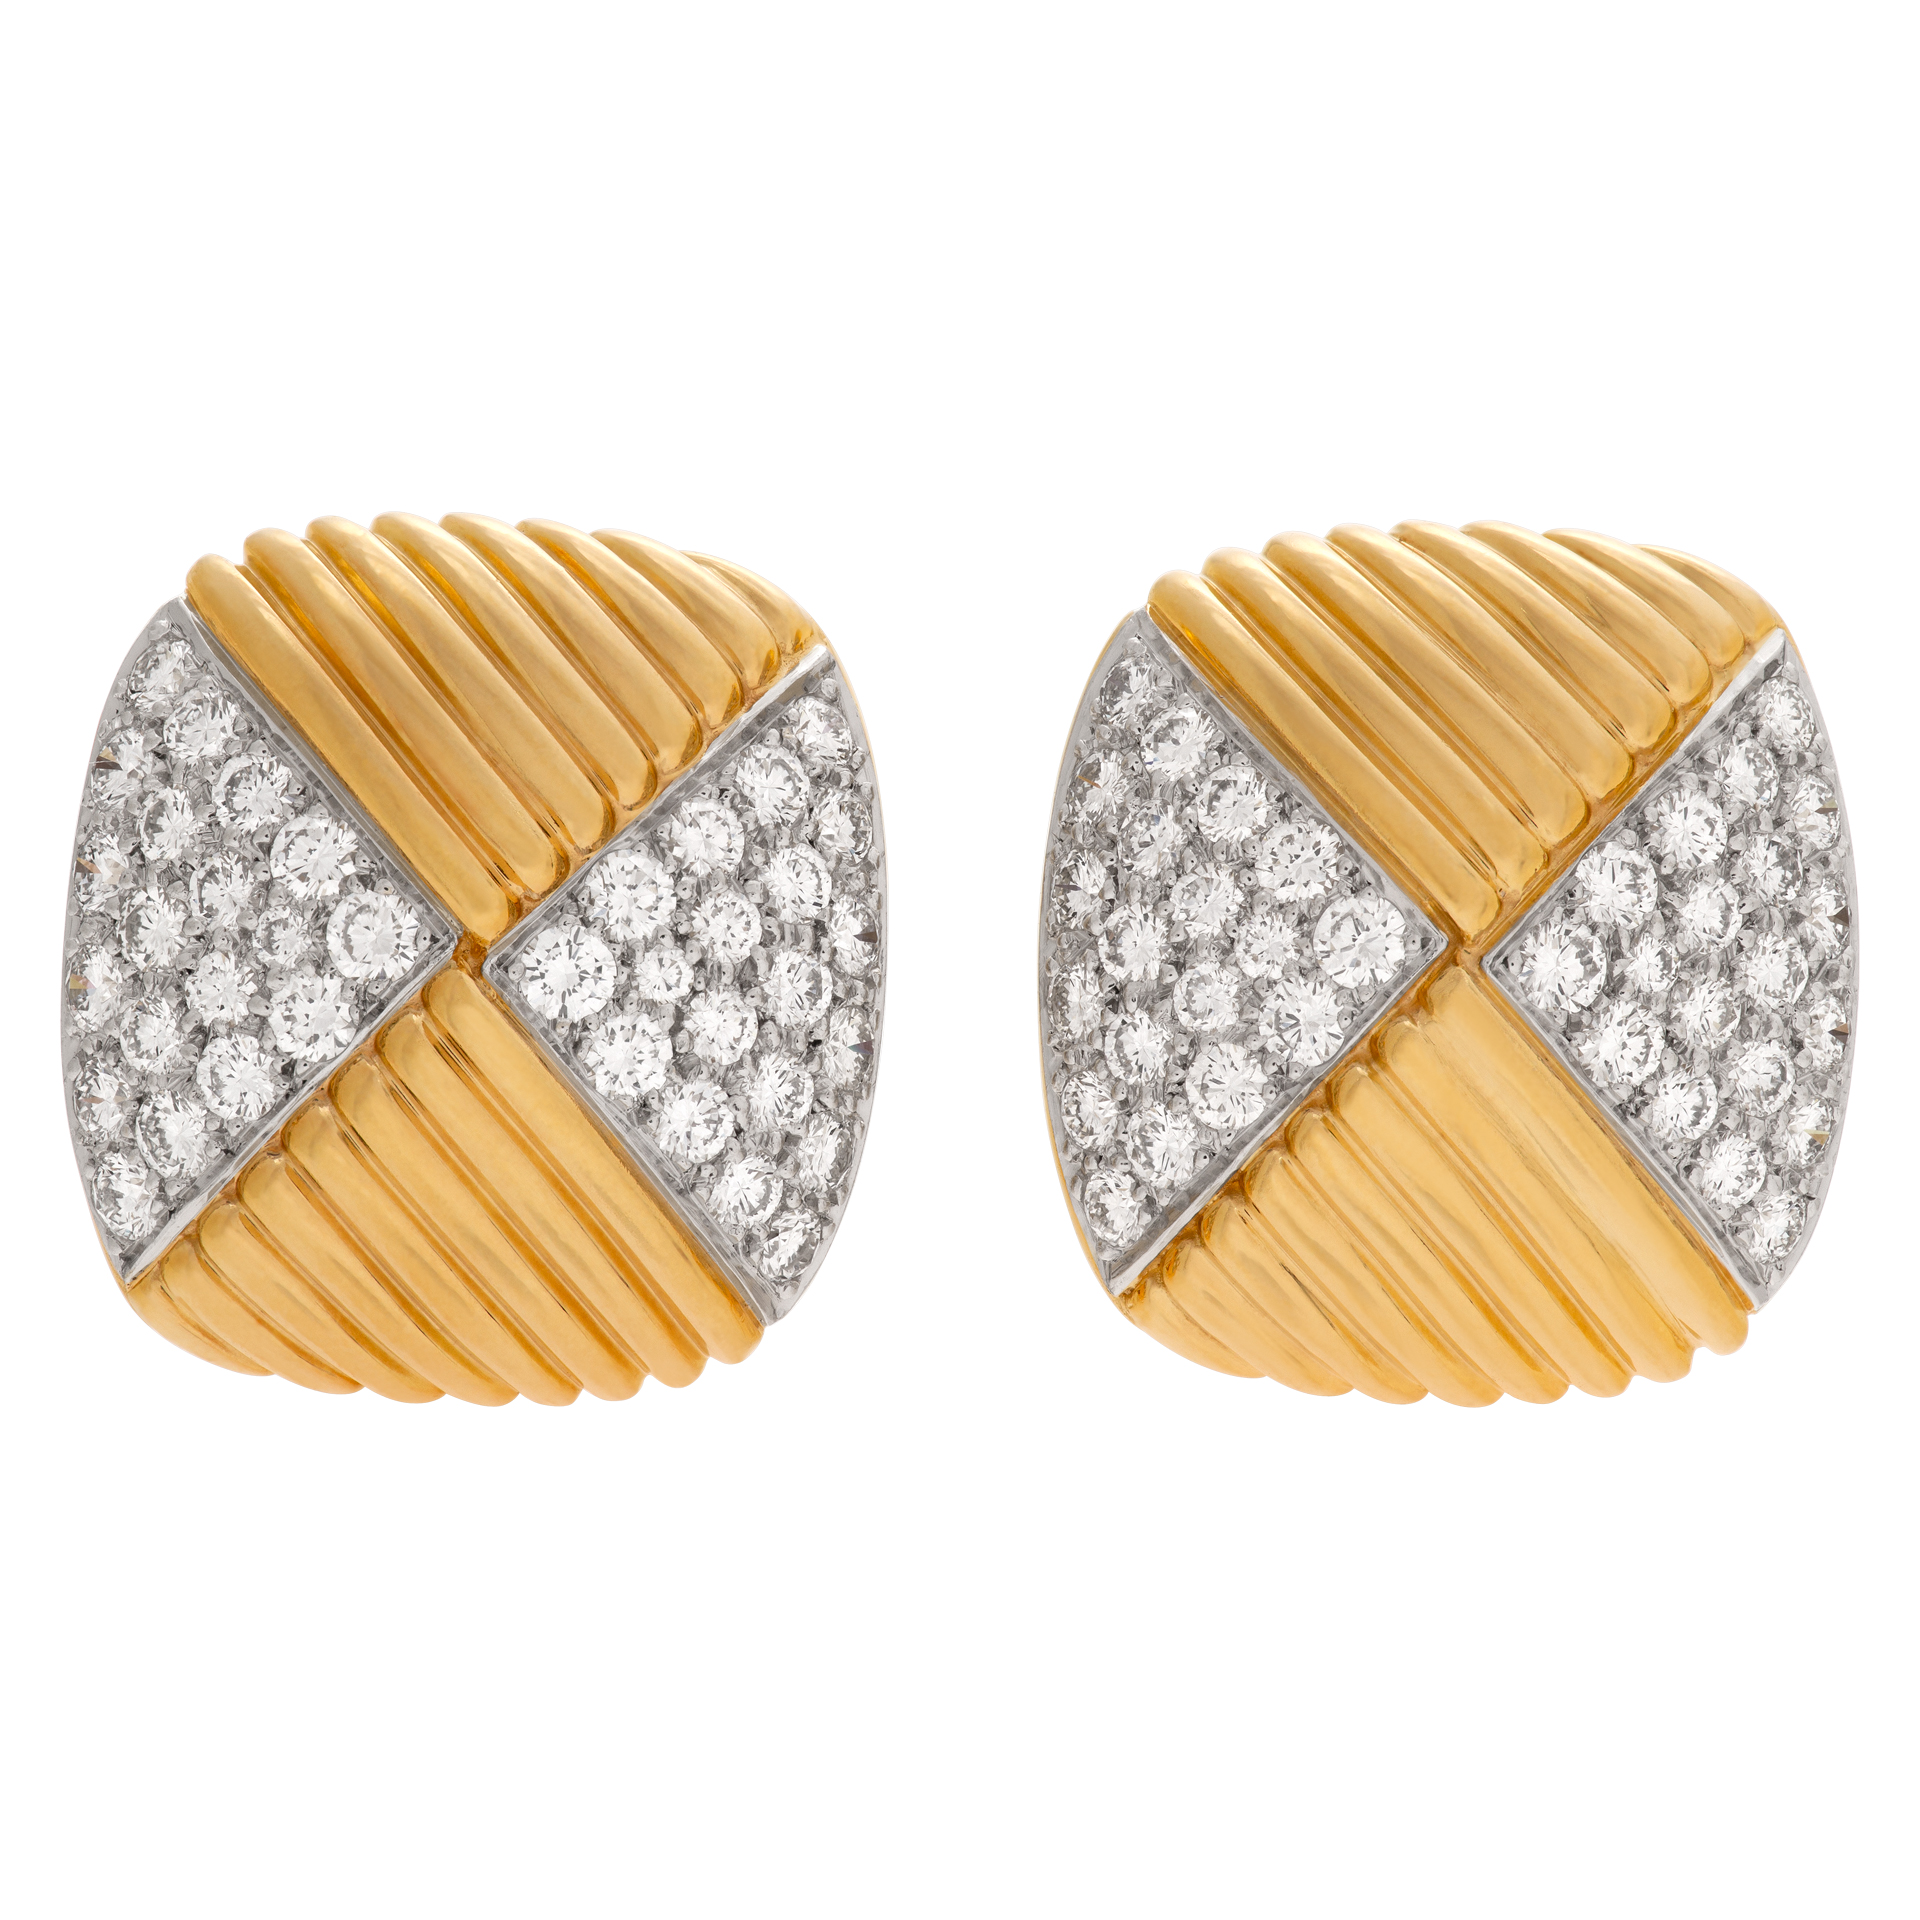 Geometric earrings in 18k with pave diamonds